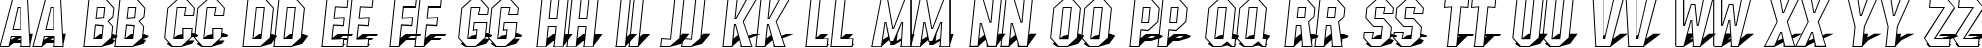 Пример написания английского алфавита шрифтом a_MachinaNova3DSh